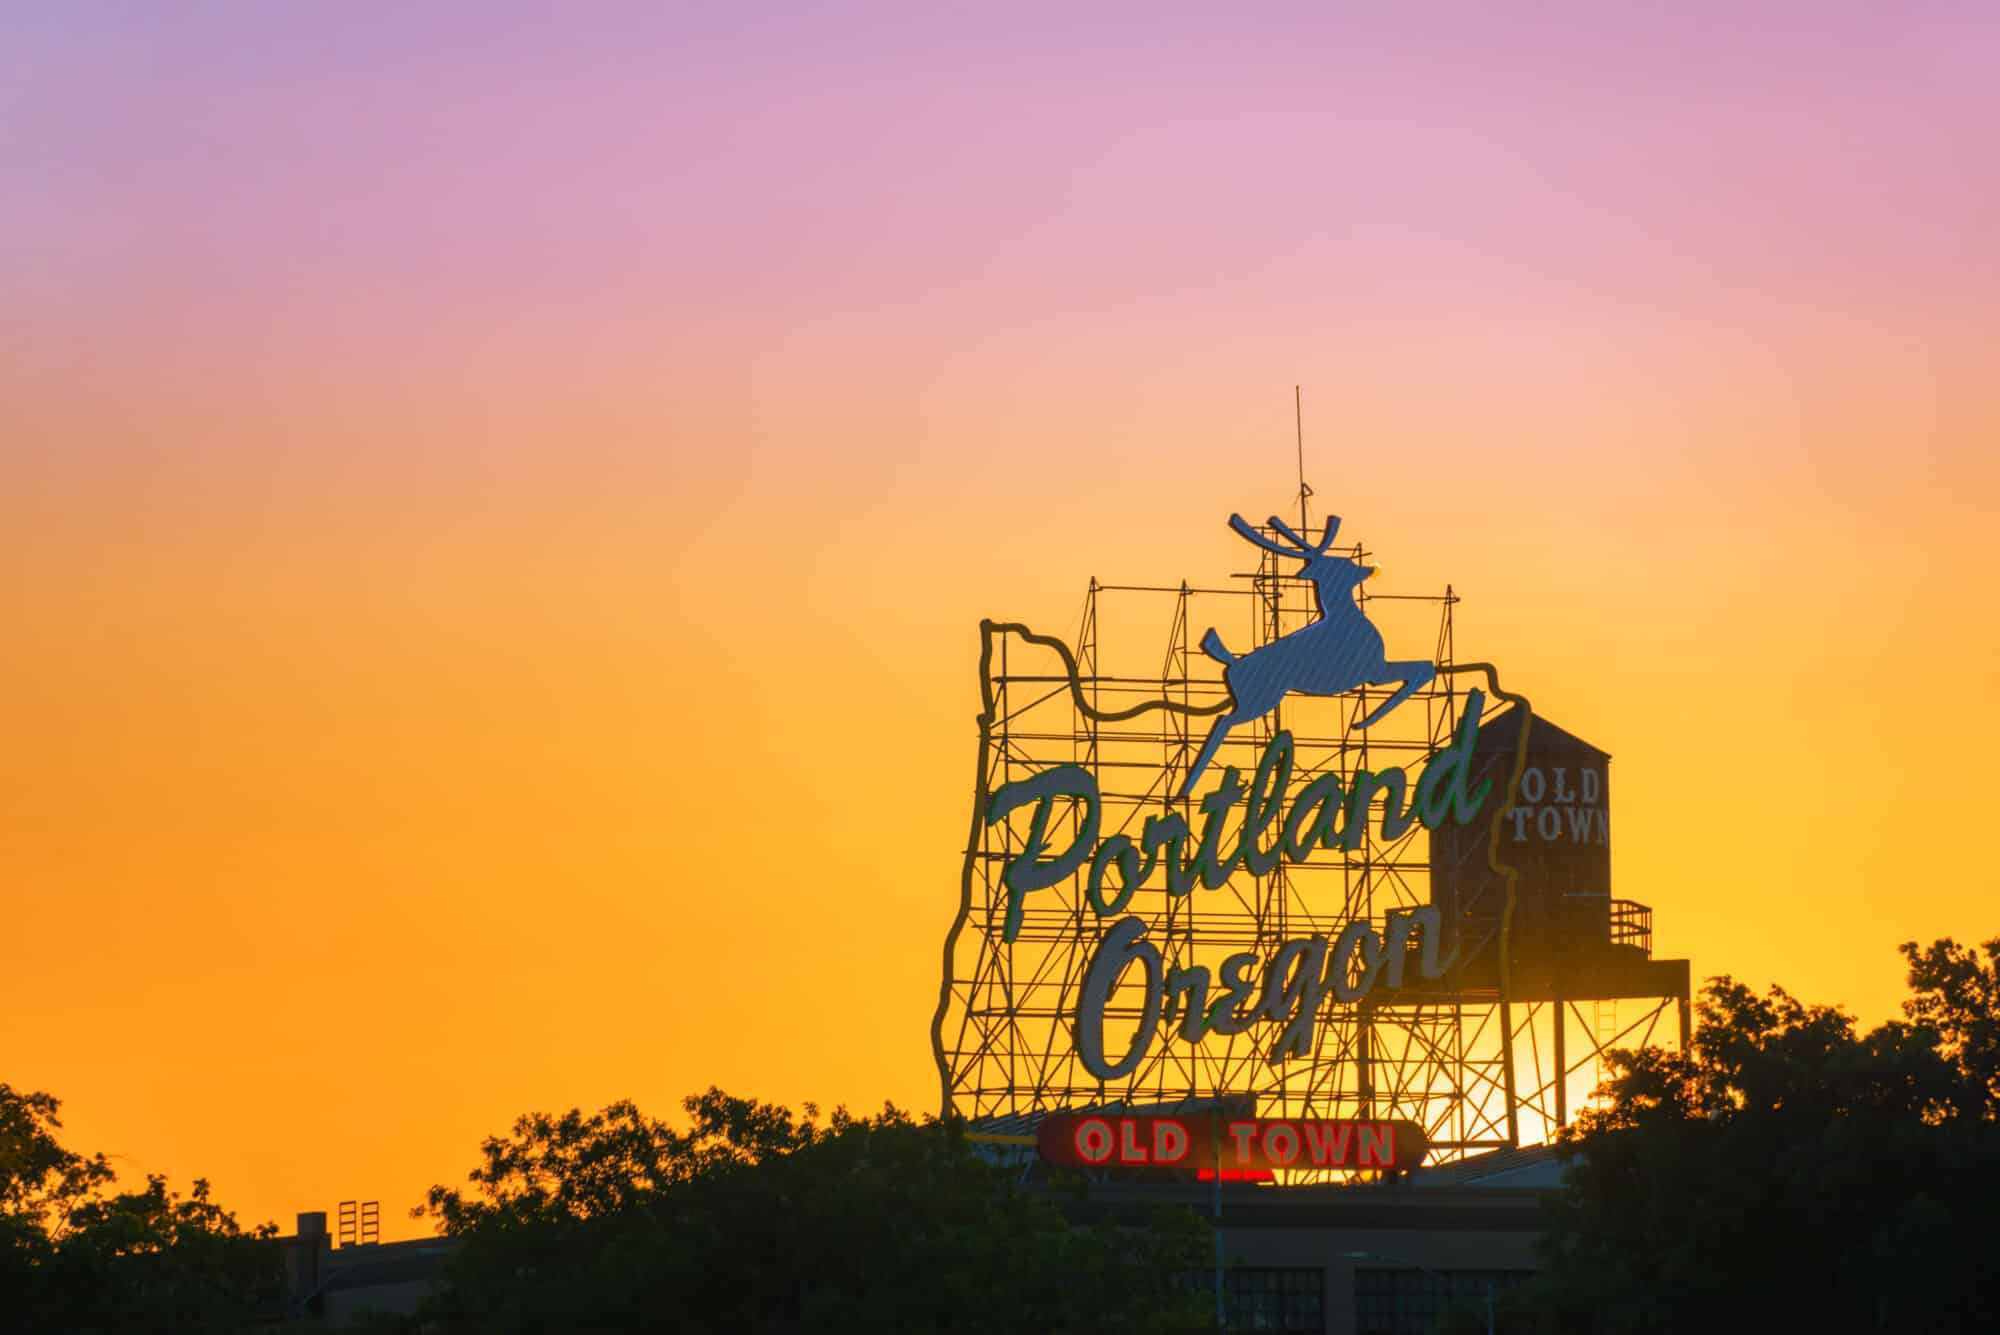 The Portland Stag billboard